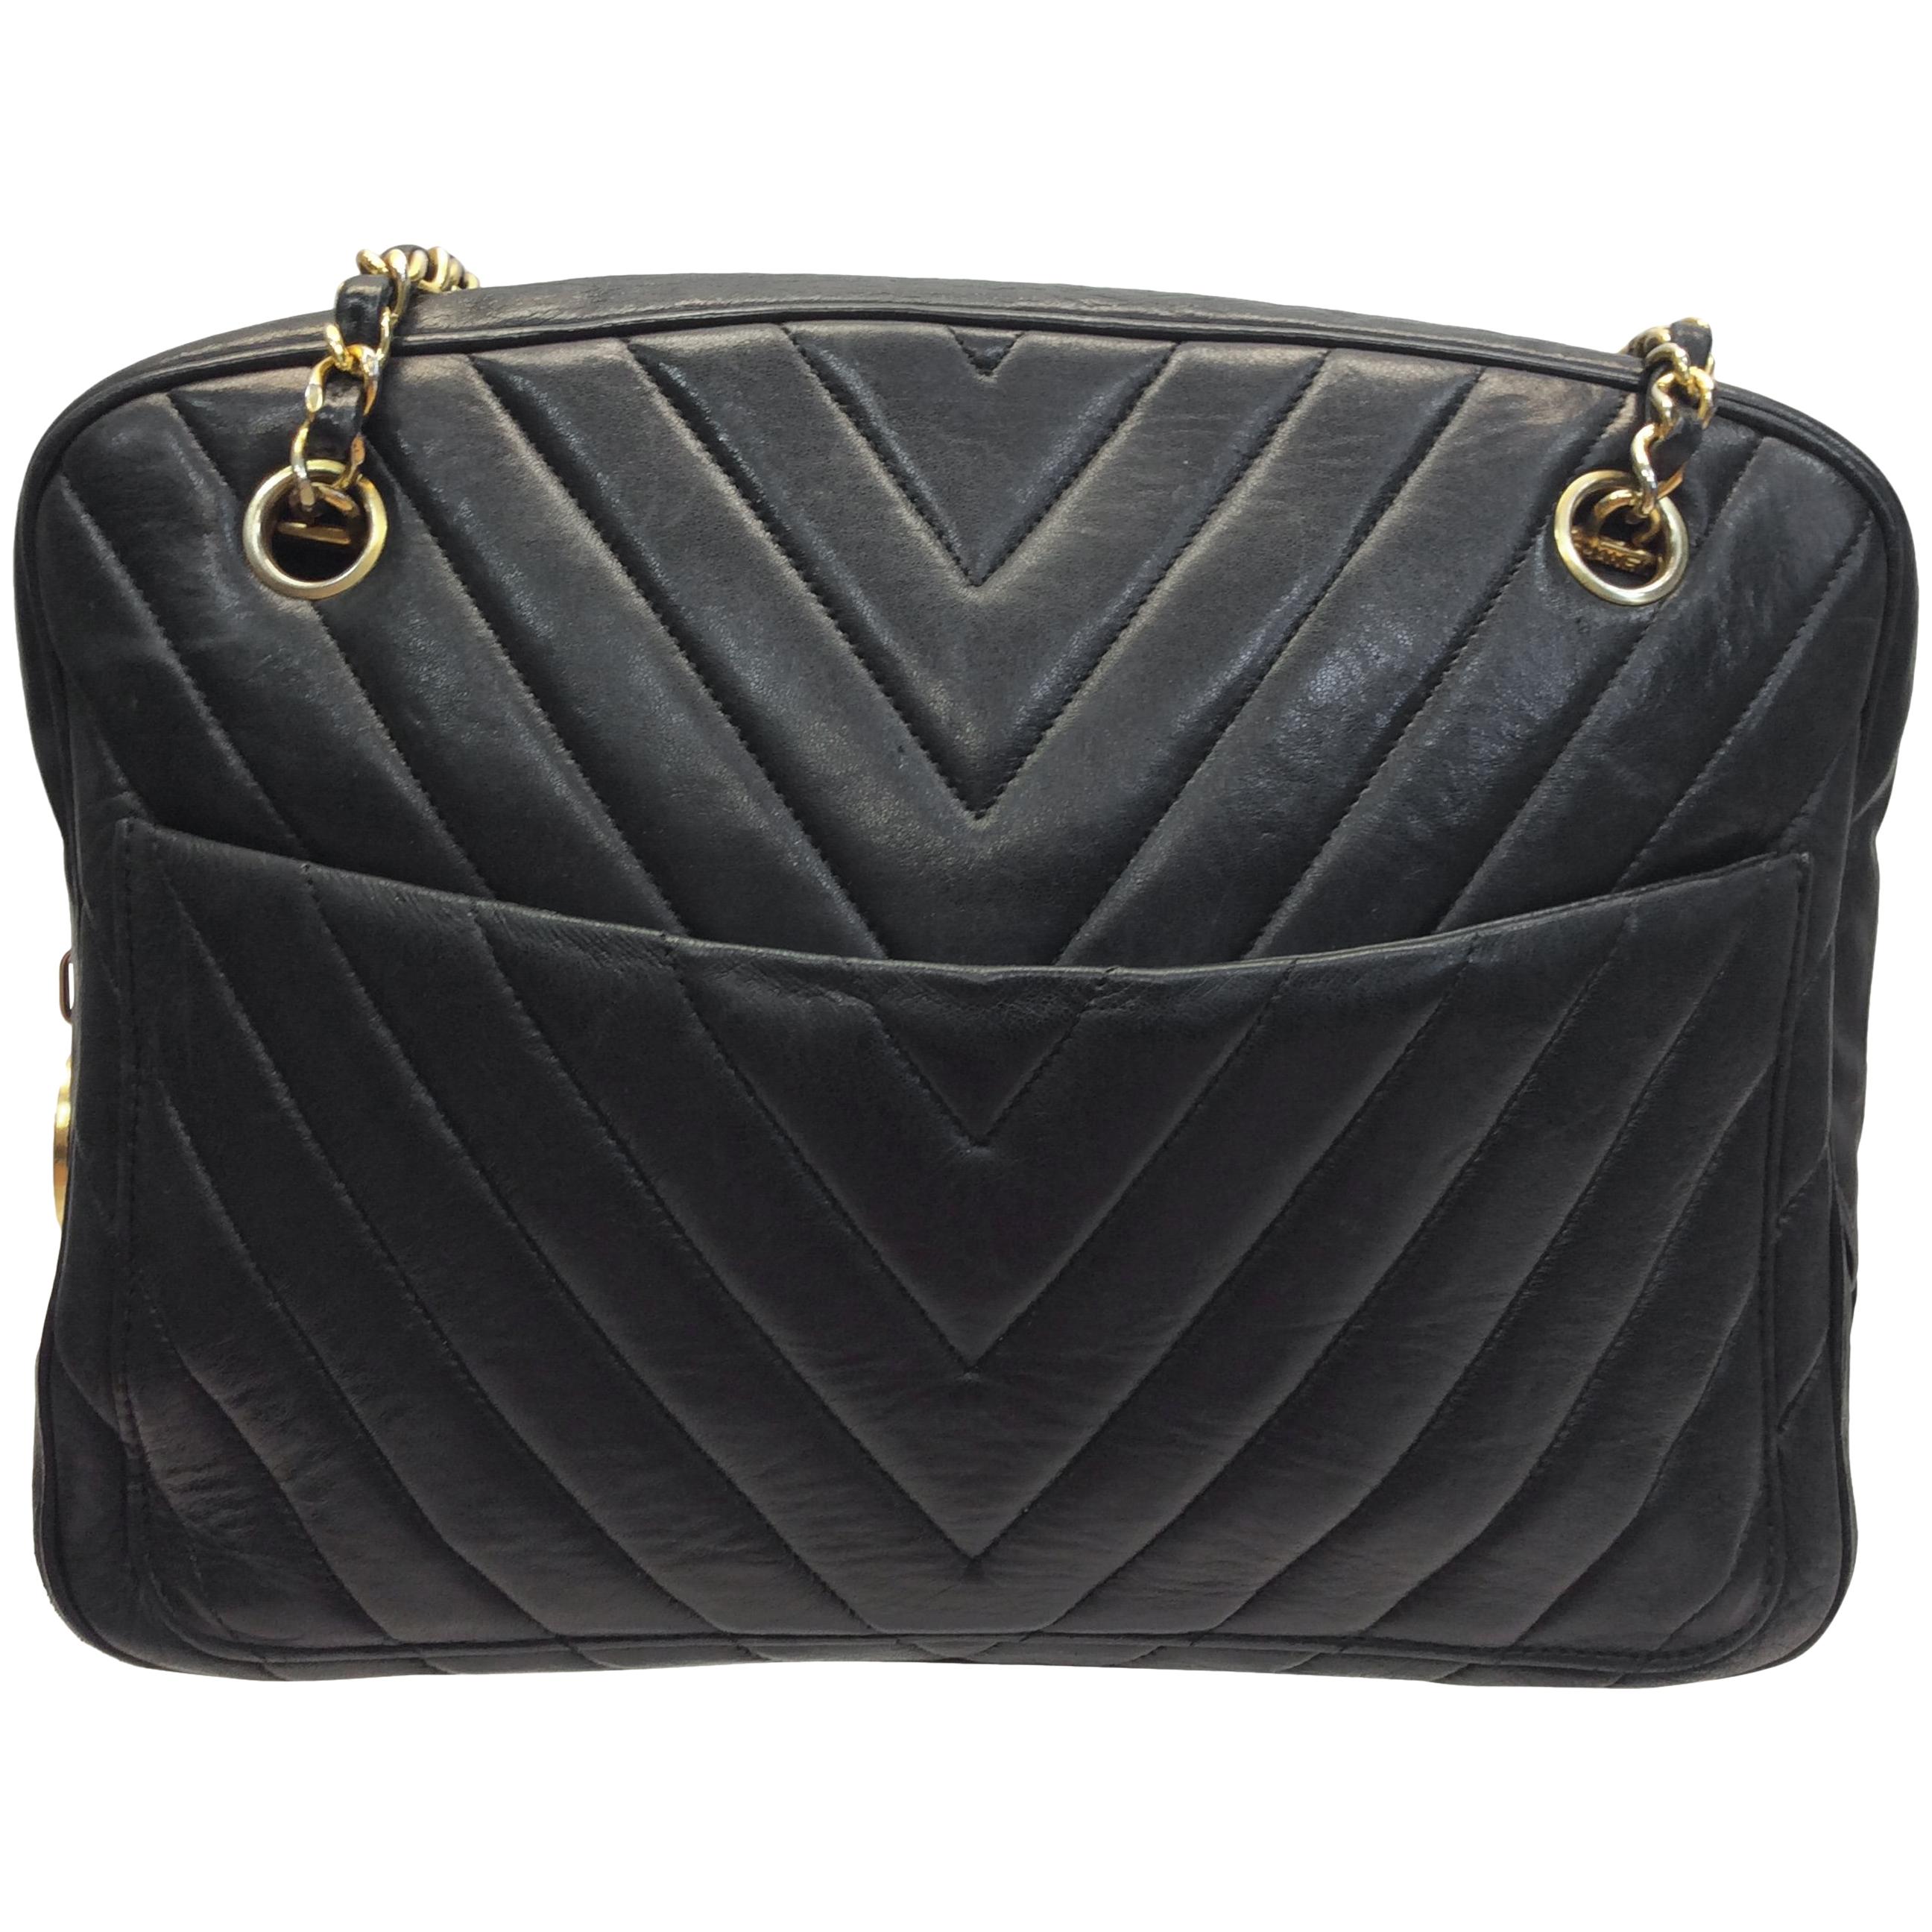 Chanel Black Chevron Quilted Leather Shoulder Bag For Sale